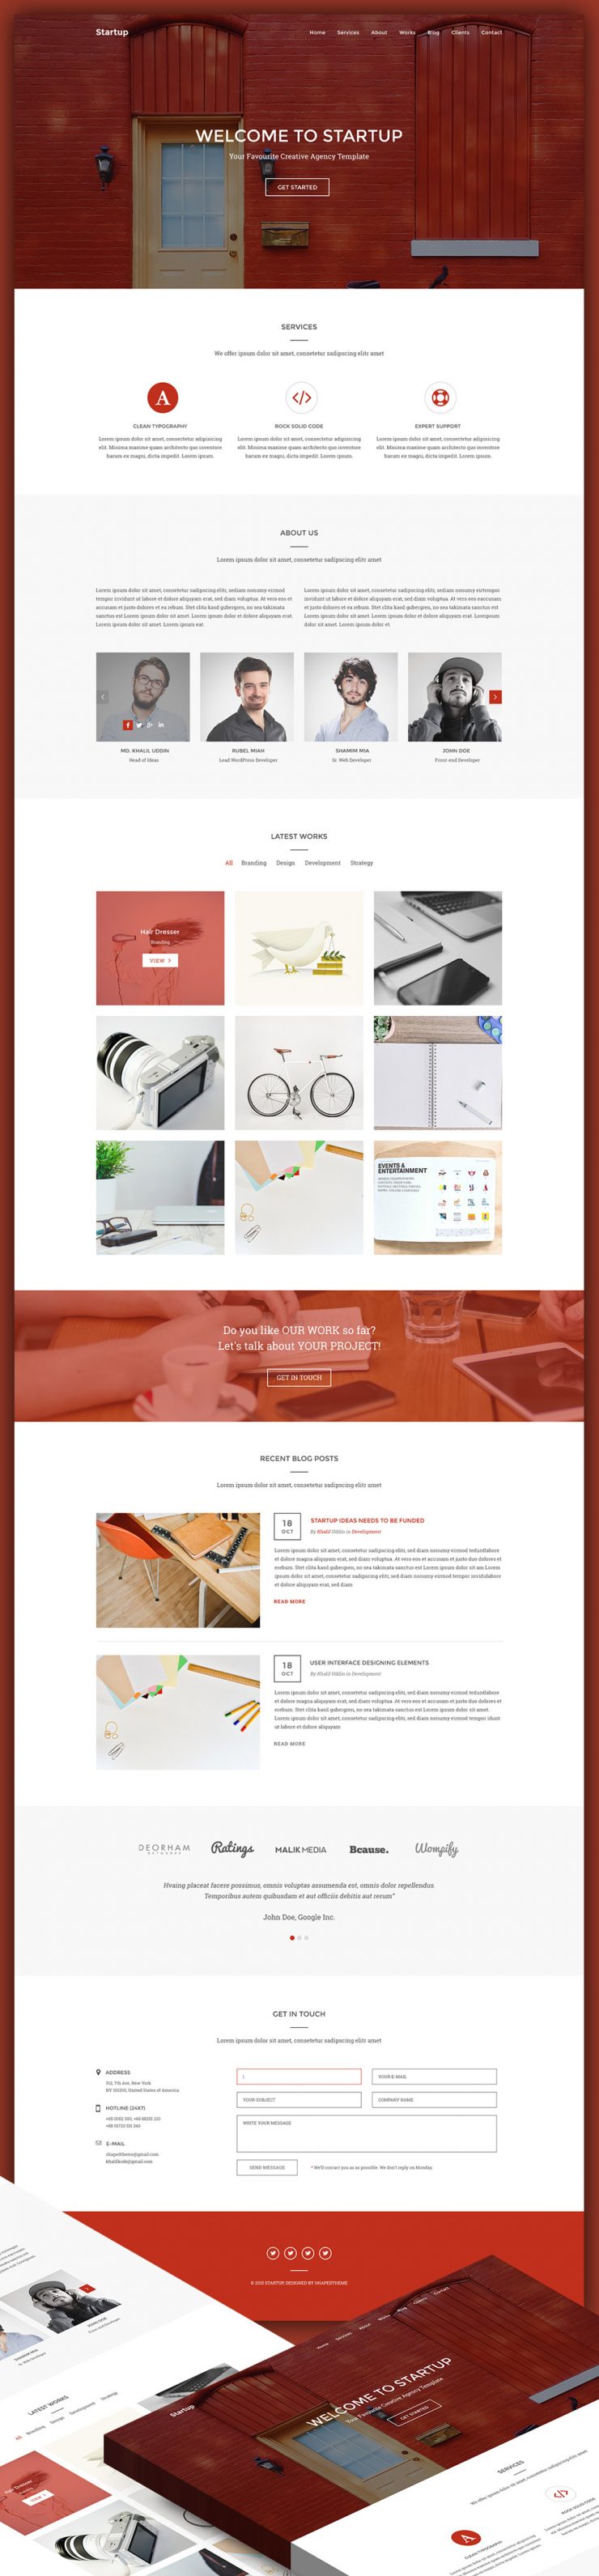 Creative Agency Website Homepage PSD Template